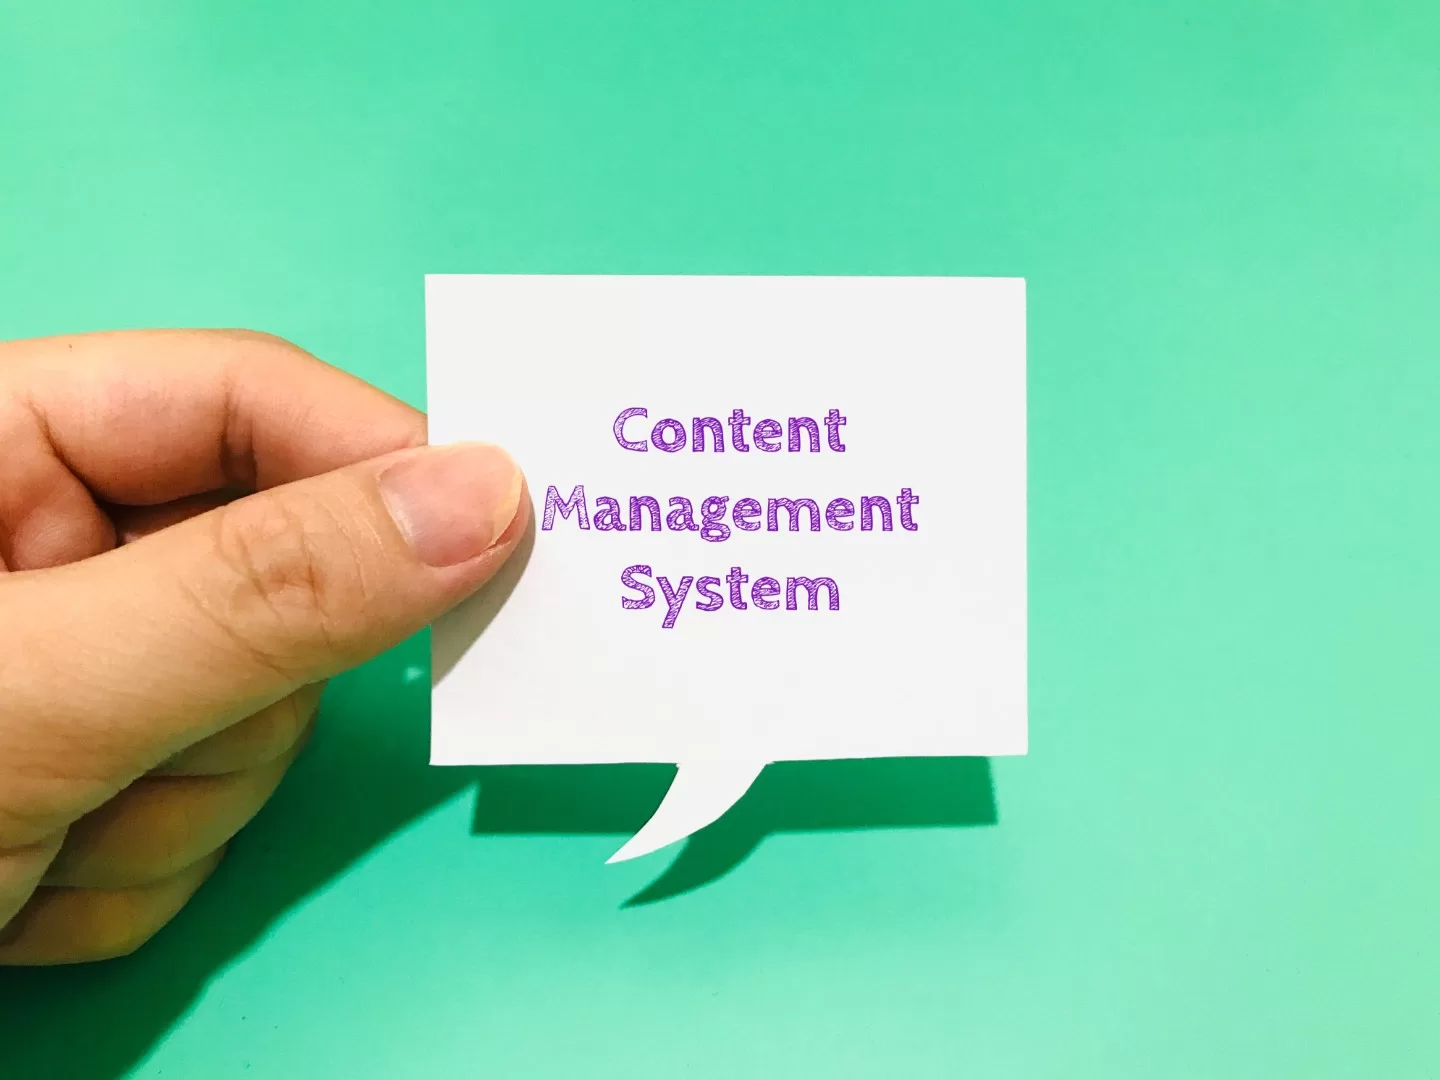 content management system 2022 10 26 06 16 14 utc Large jpg